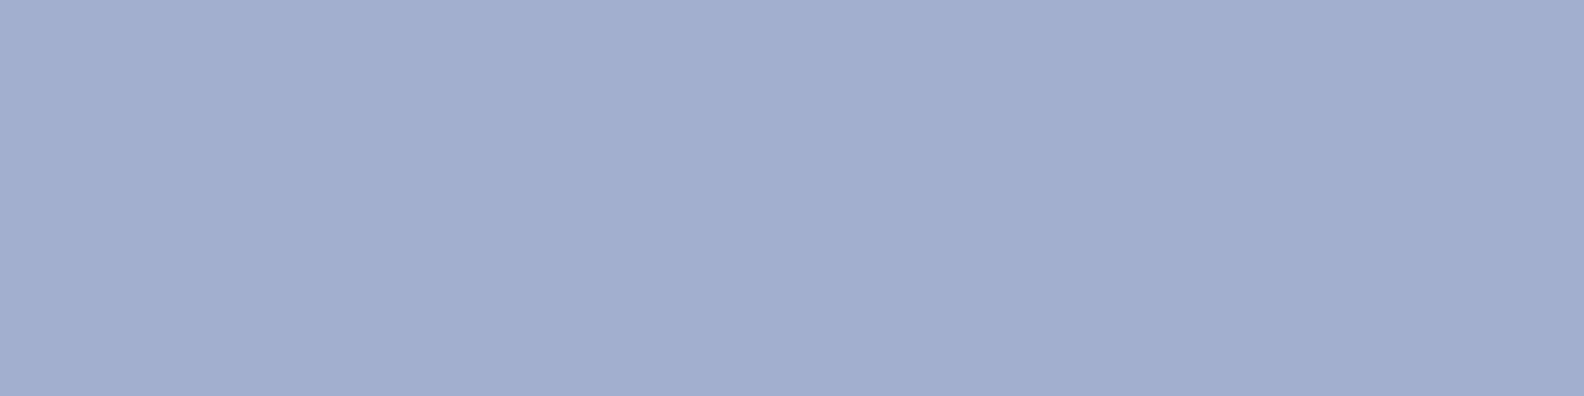 1584x396 Wild Blue Yonder Solid Color Background